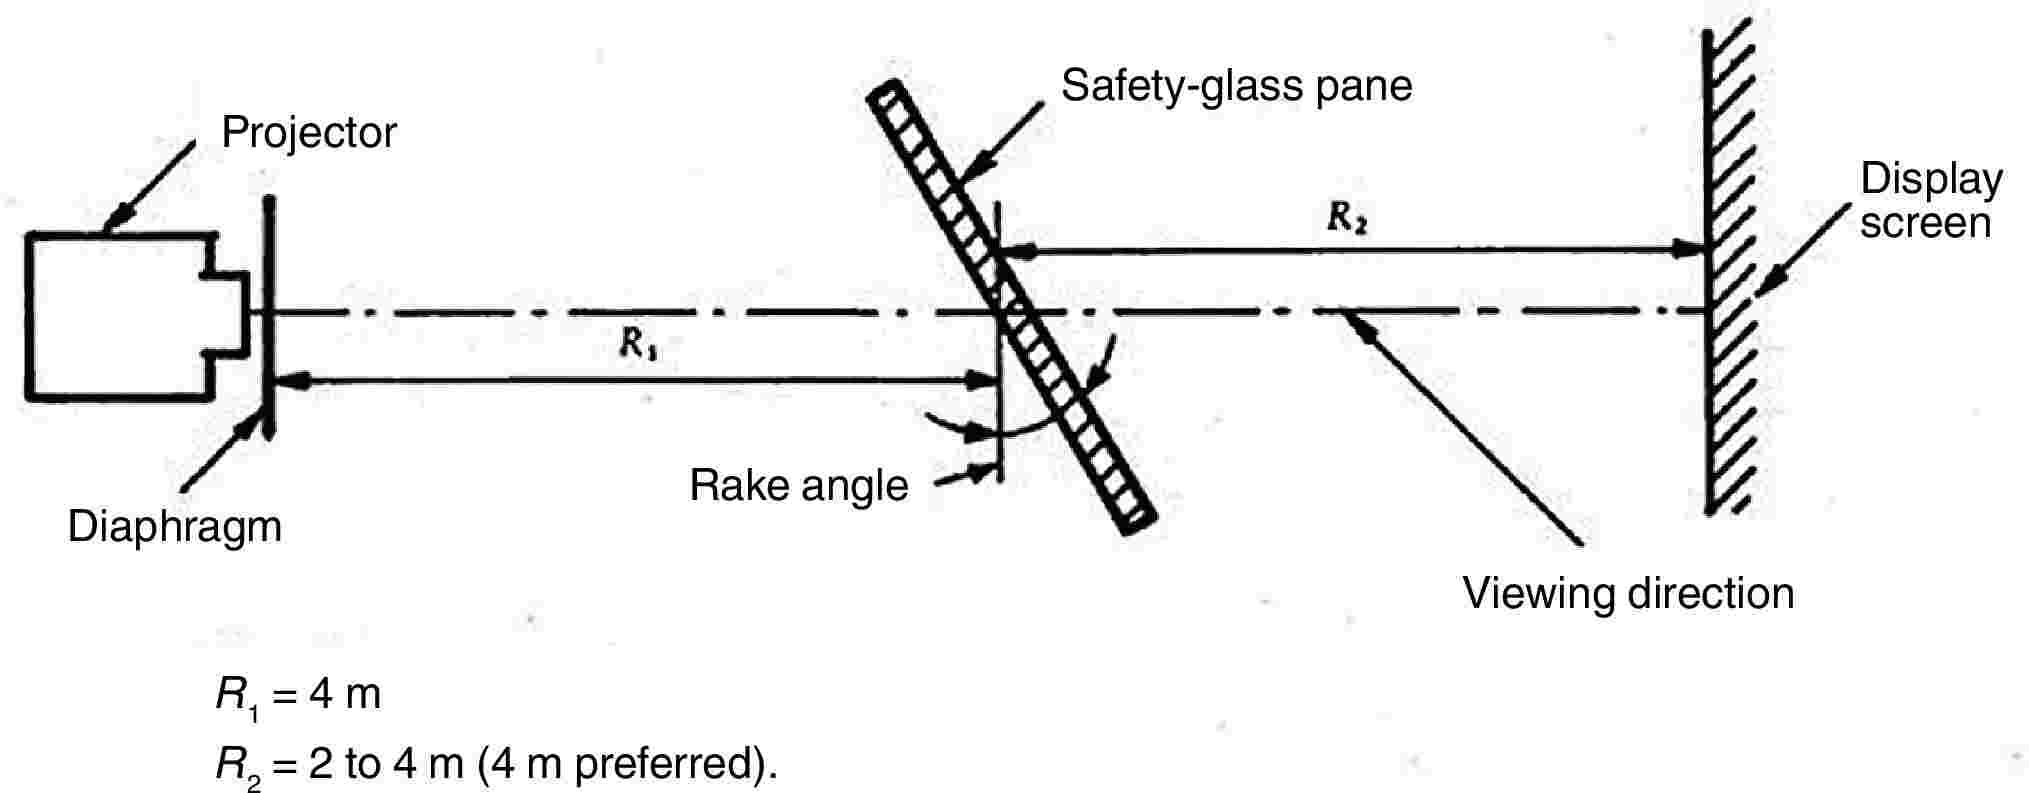 ProjectorSafety-glass paneDisplay screenDiaphragmRake angleViewing directionR1 = 4 mR2 = 2 to 4 m (4 m preferred).